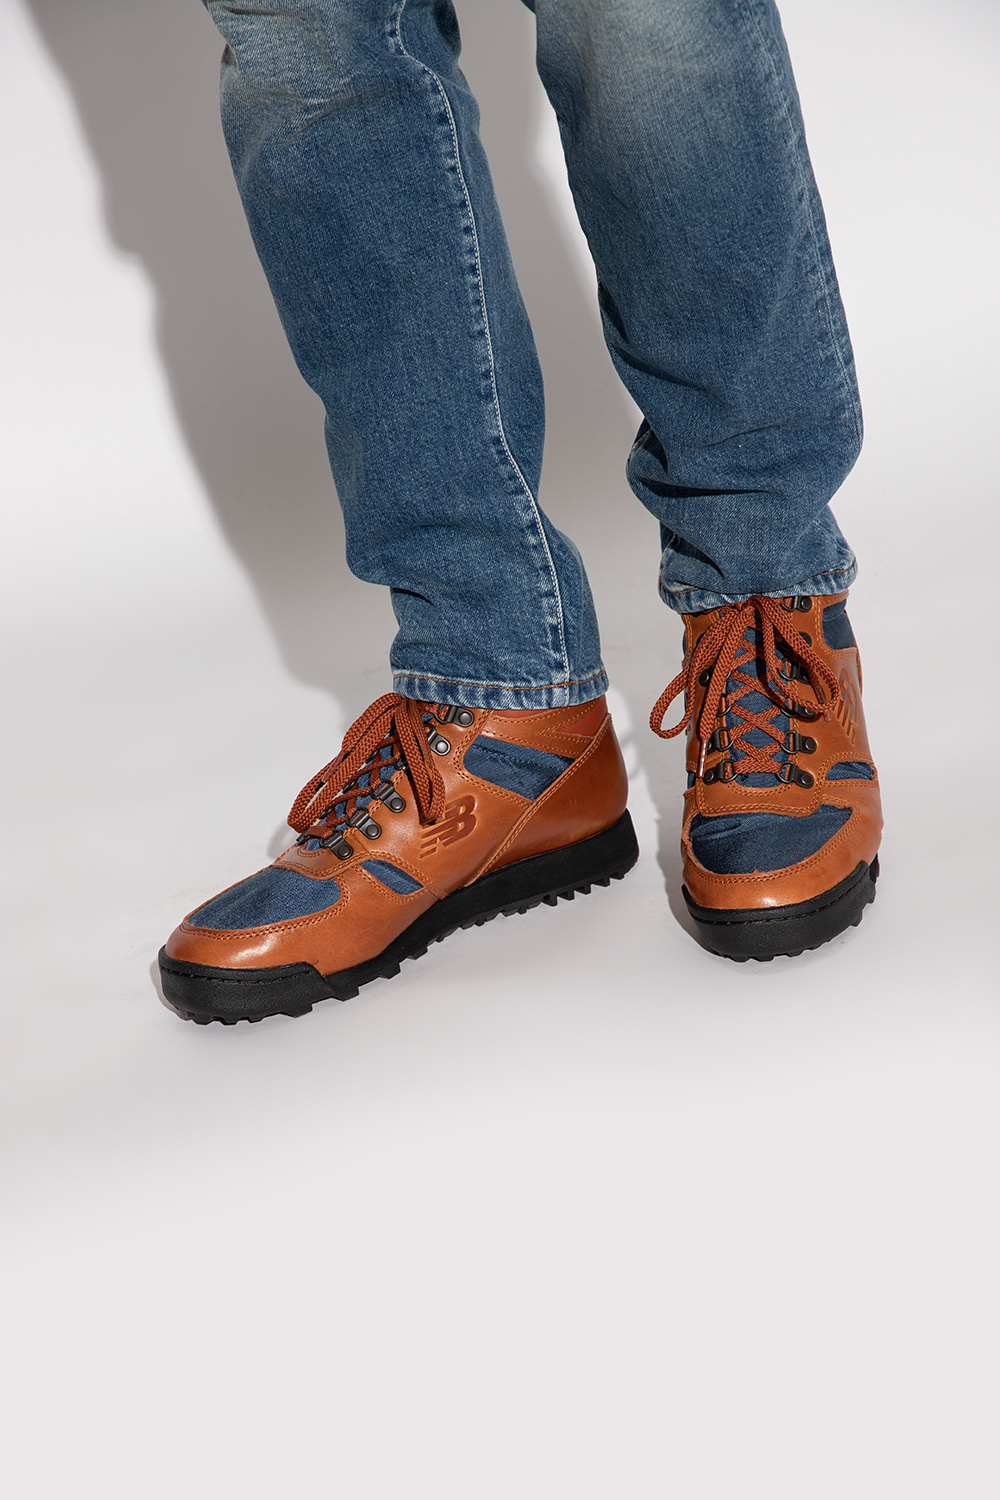 New Balance 'URAINOG' sneakers | Men's Shoes | Vitkac